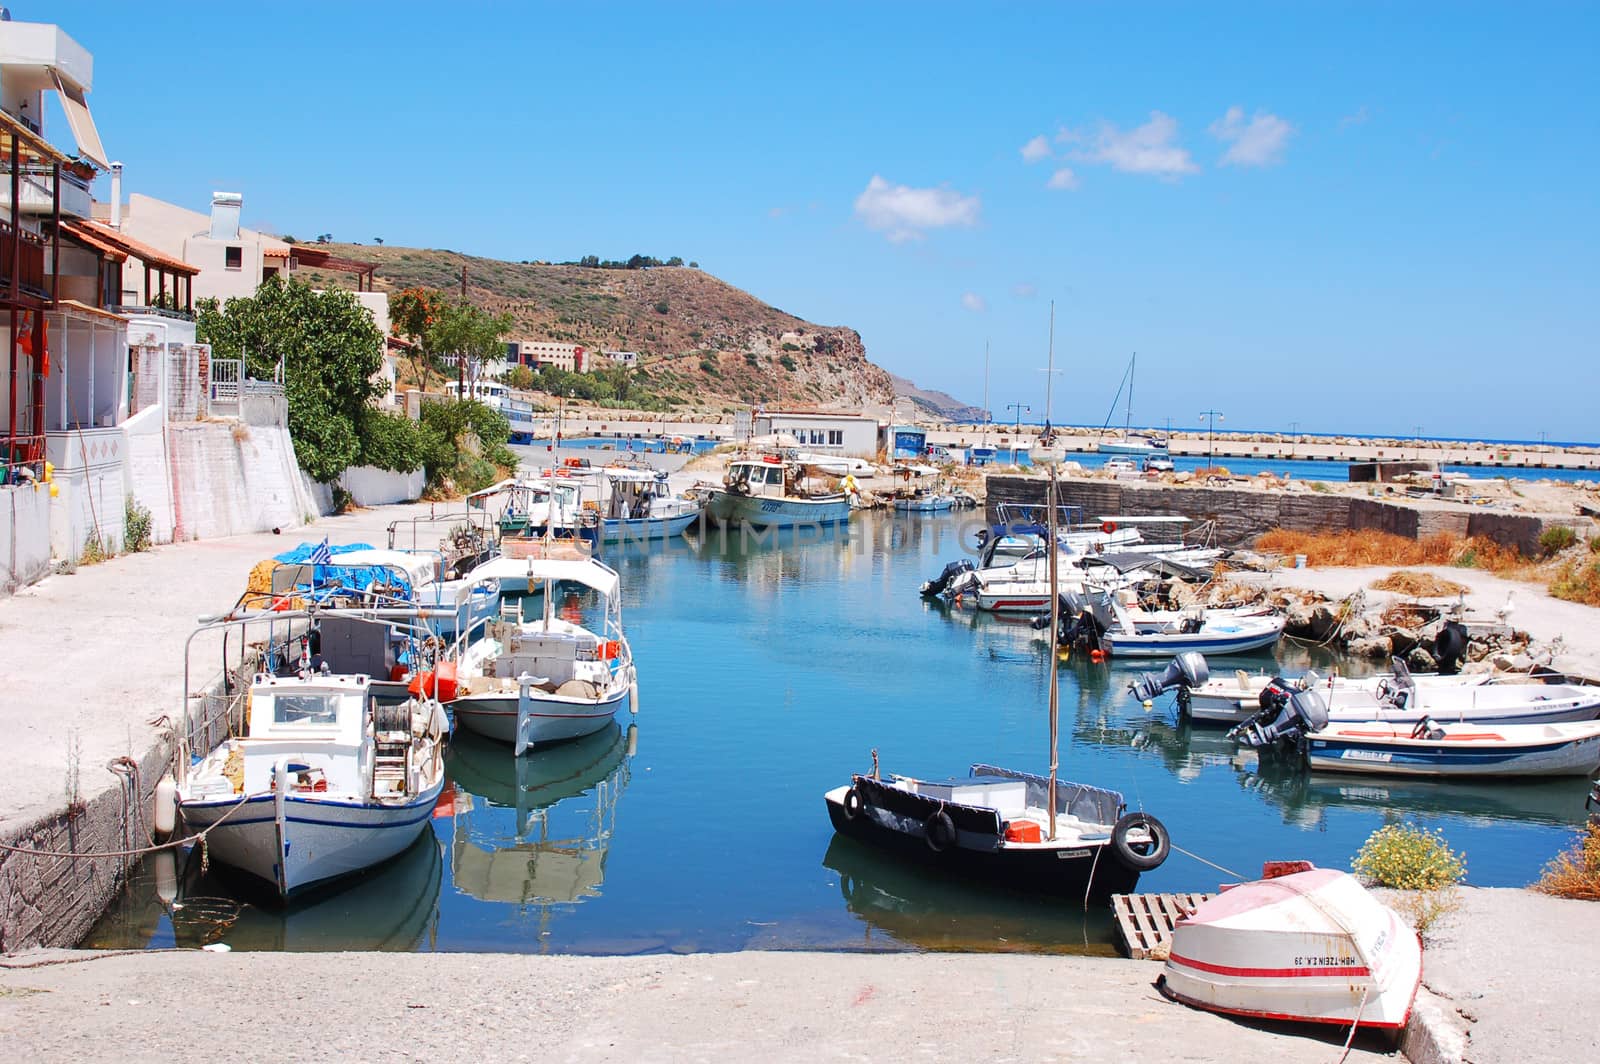 Small harbor in Crete by edomor